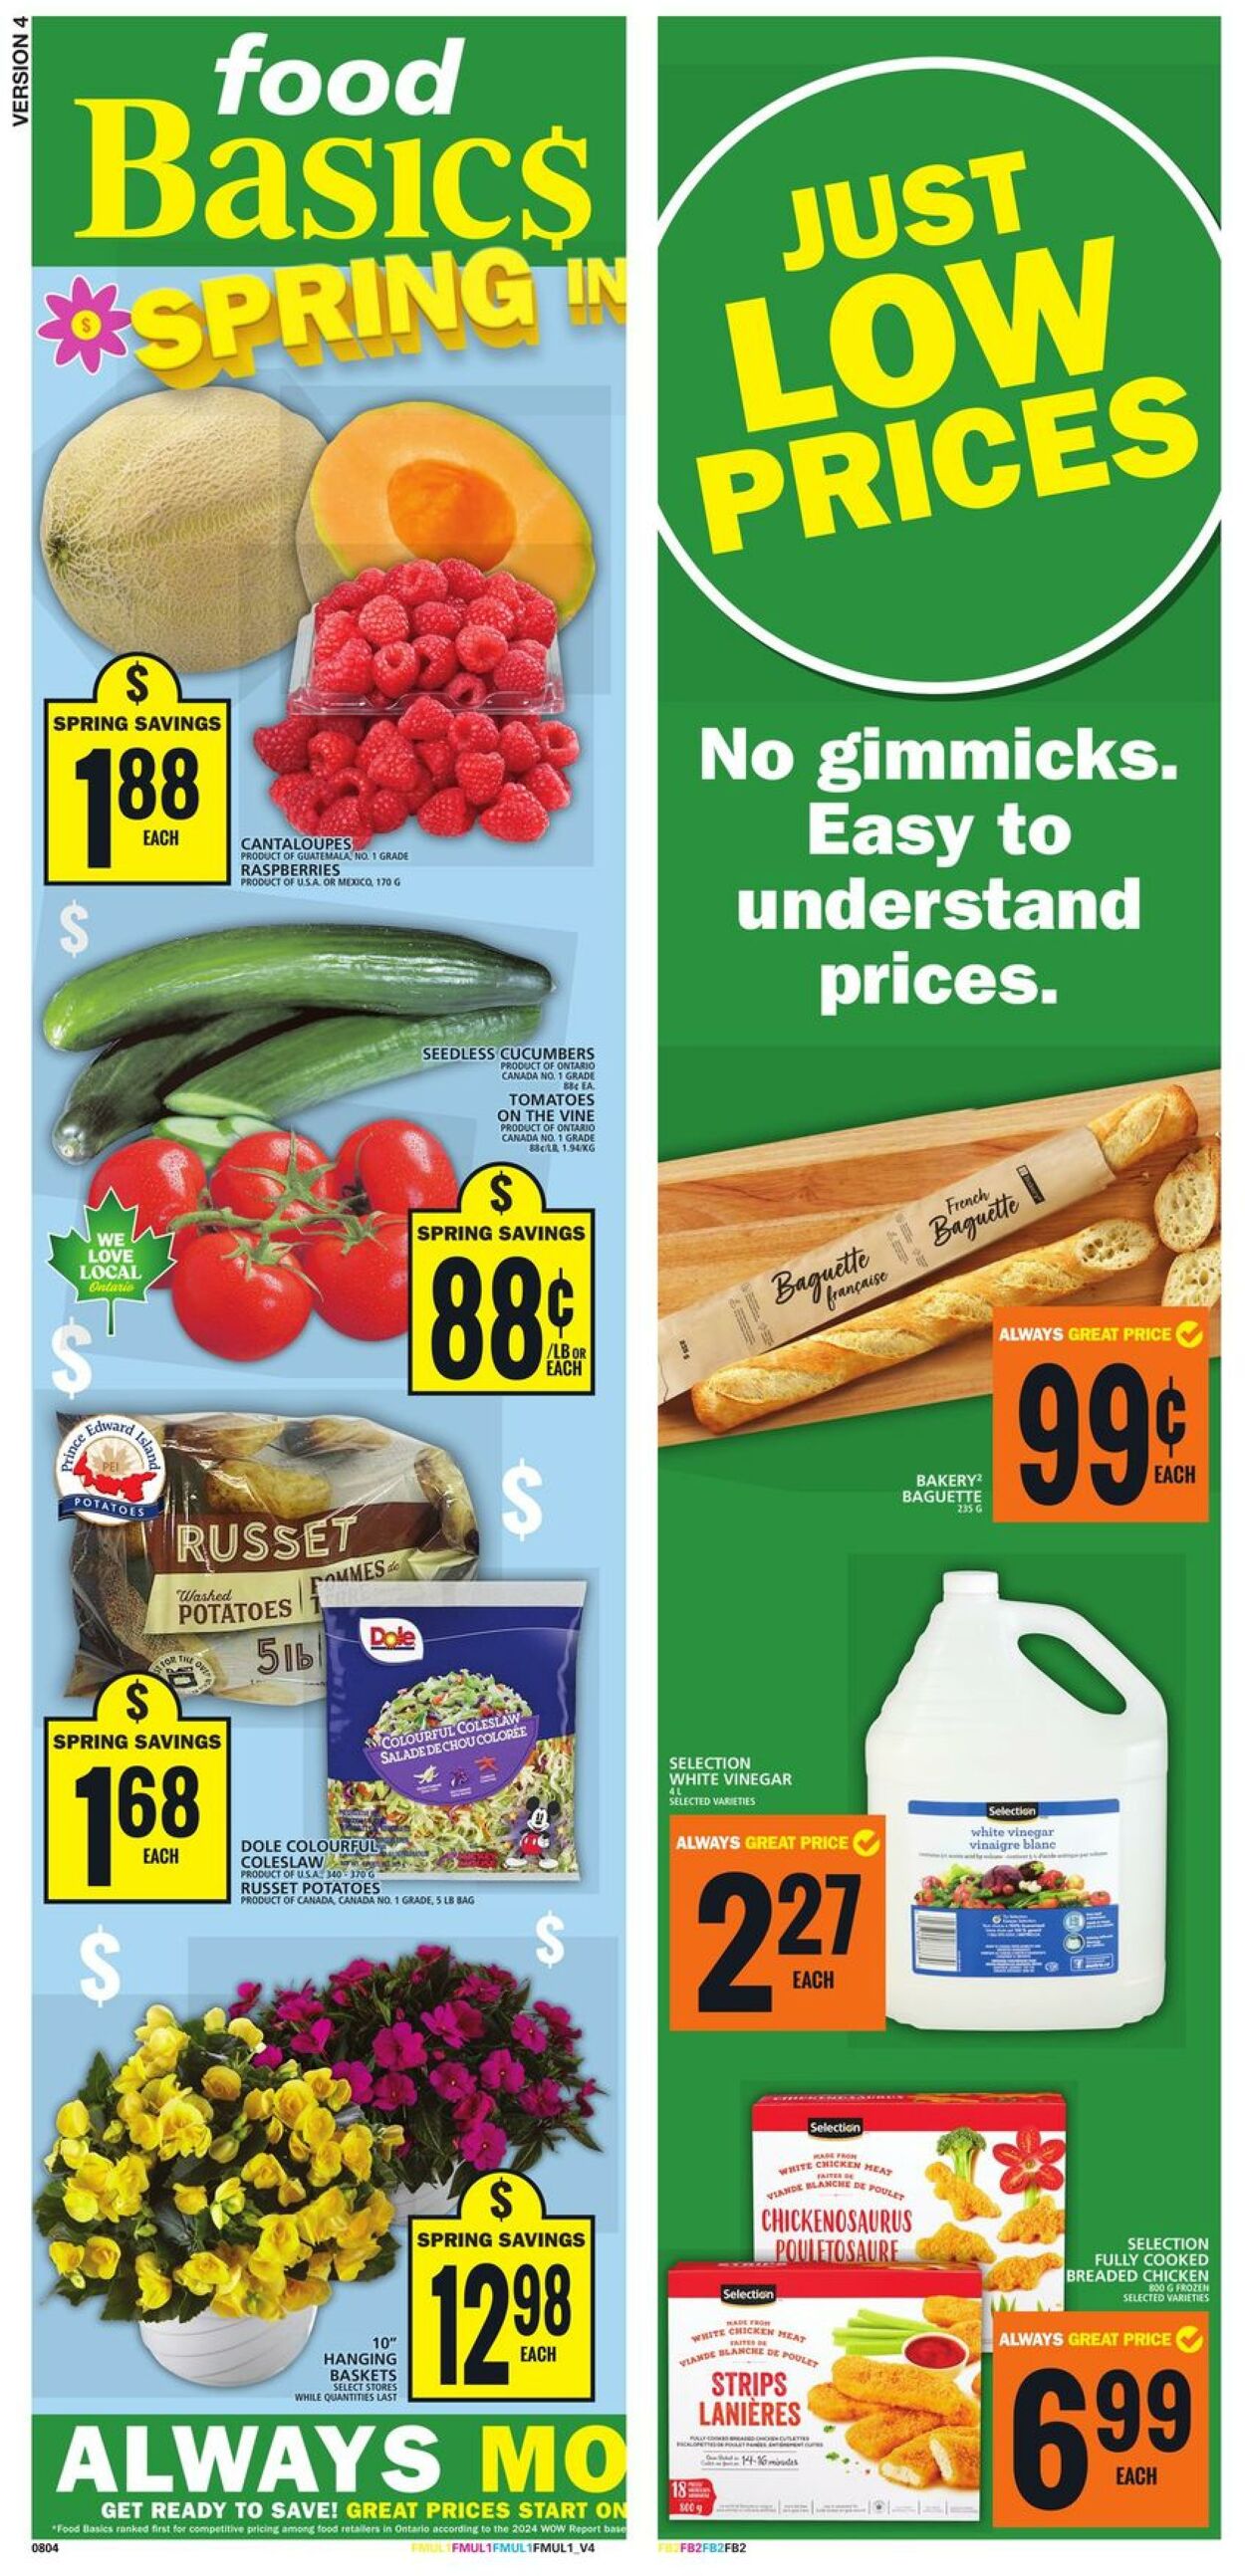 Food Basics Promotional flyers